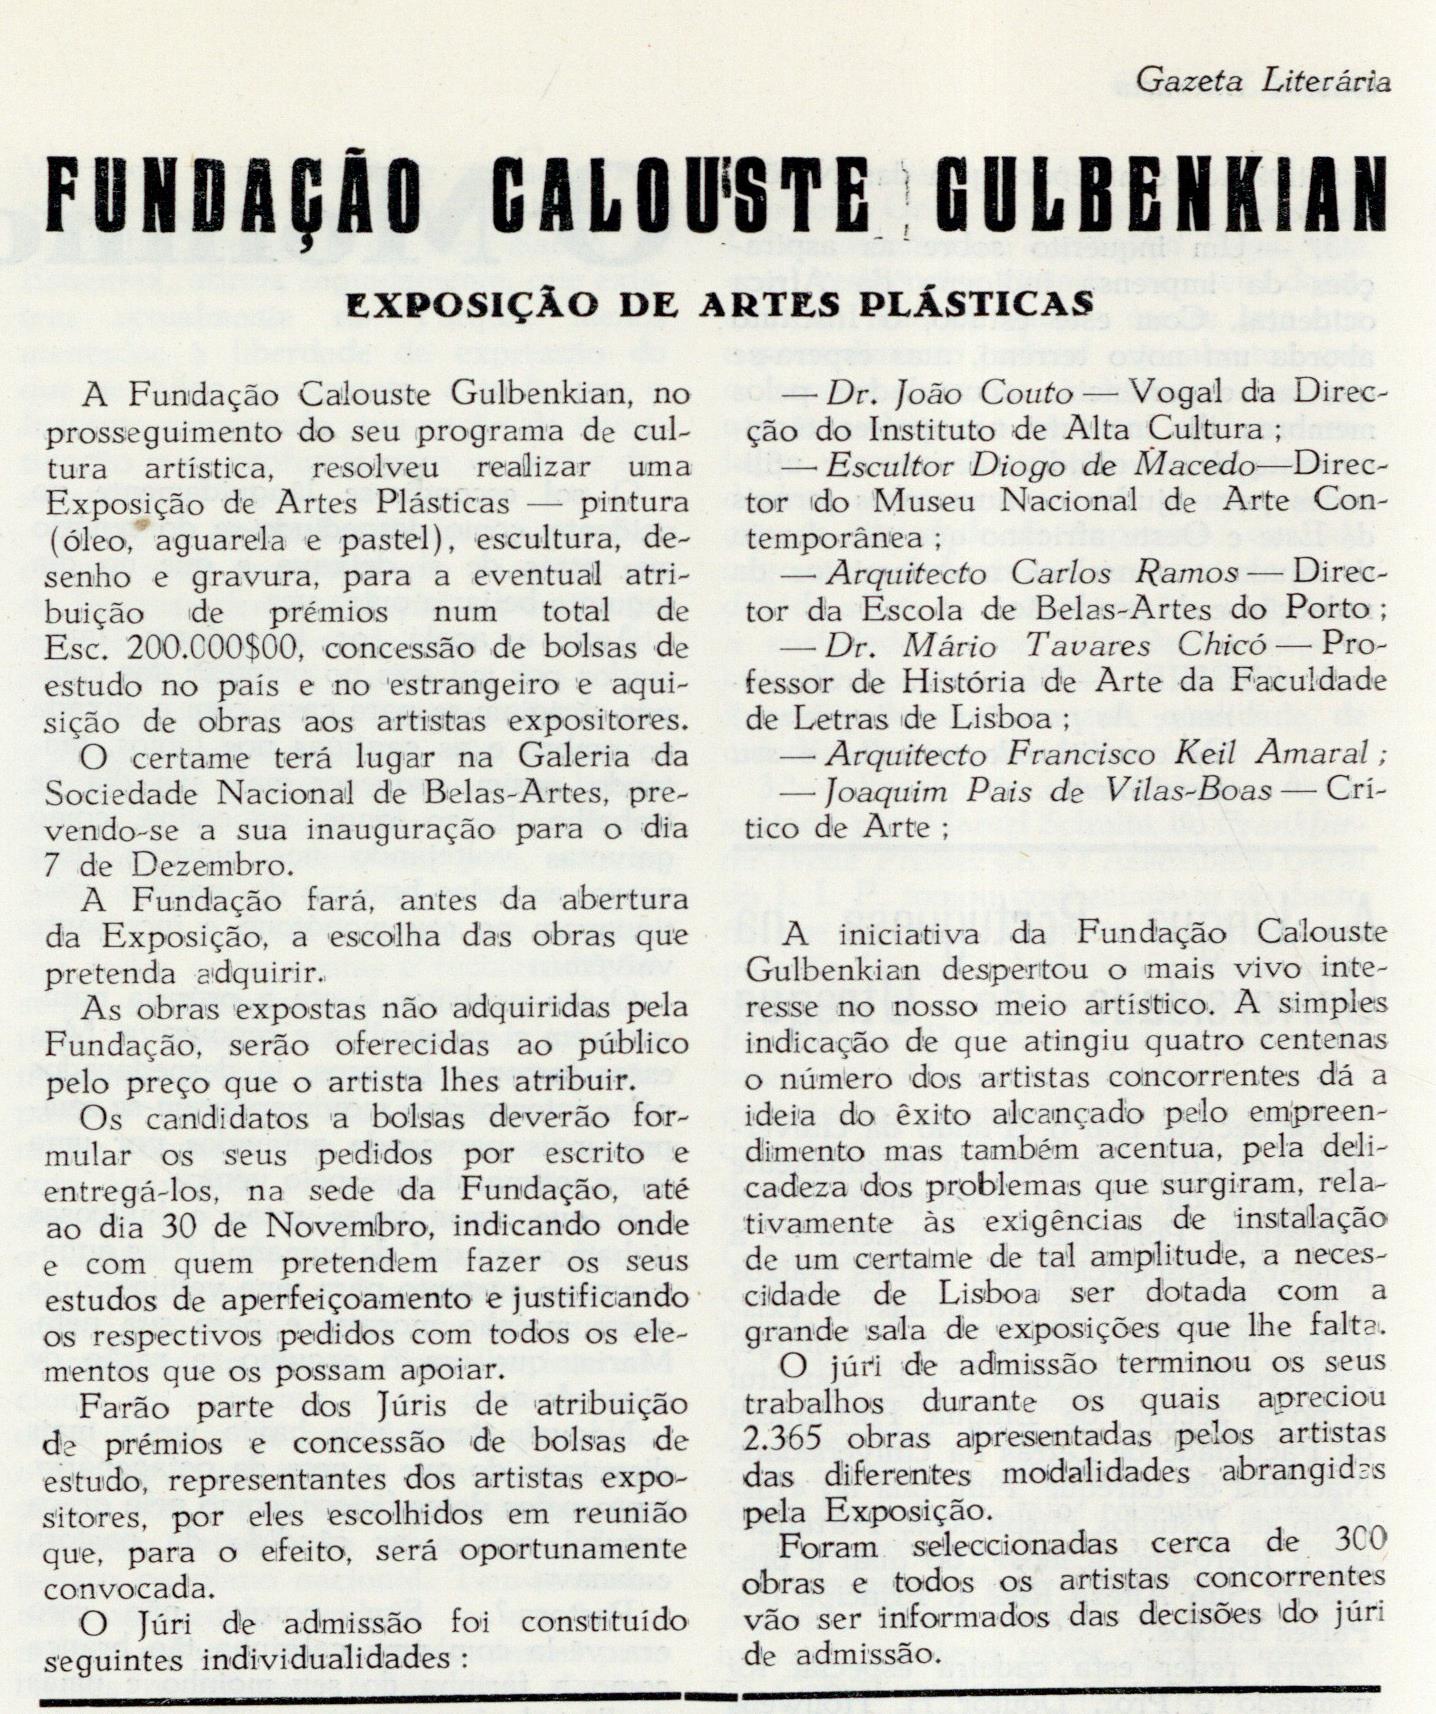 GazetaLiteraria_Vol5_N62-63_Out-Nov1957_0178